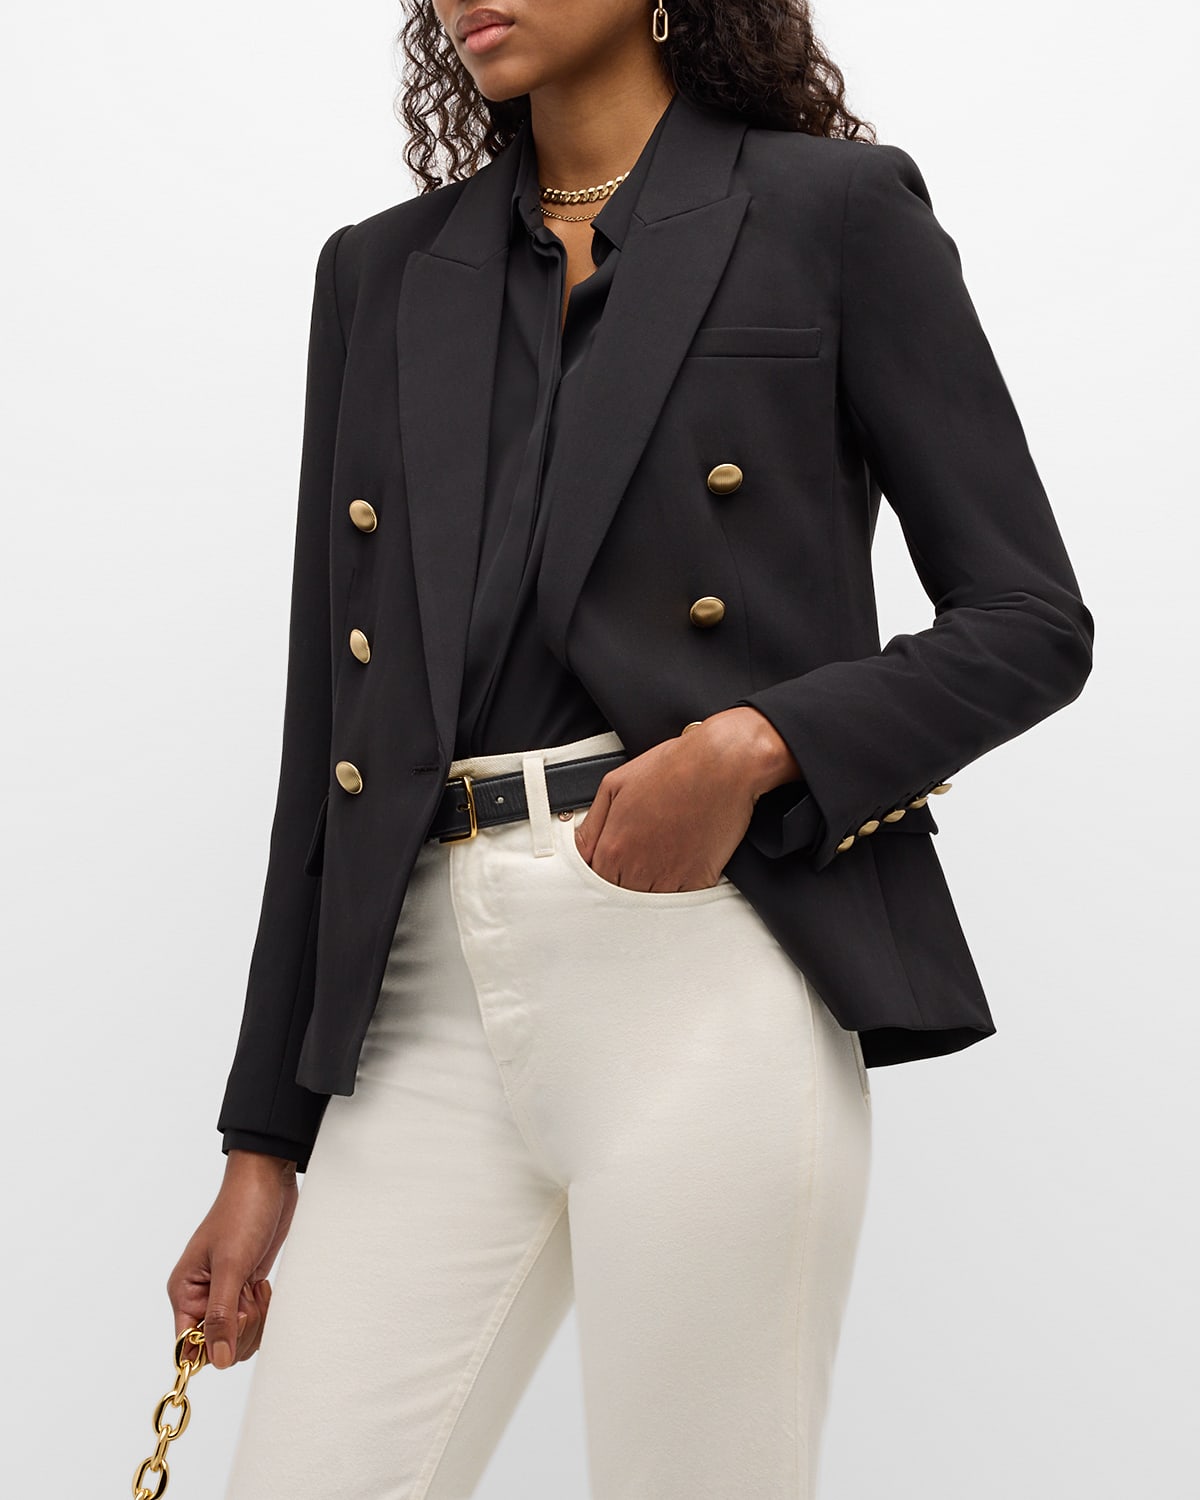 L'Agence Kenzie Double-Breasted Blazer Jacket